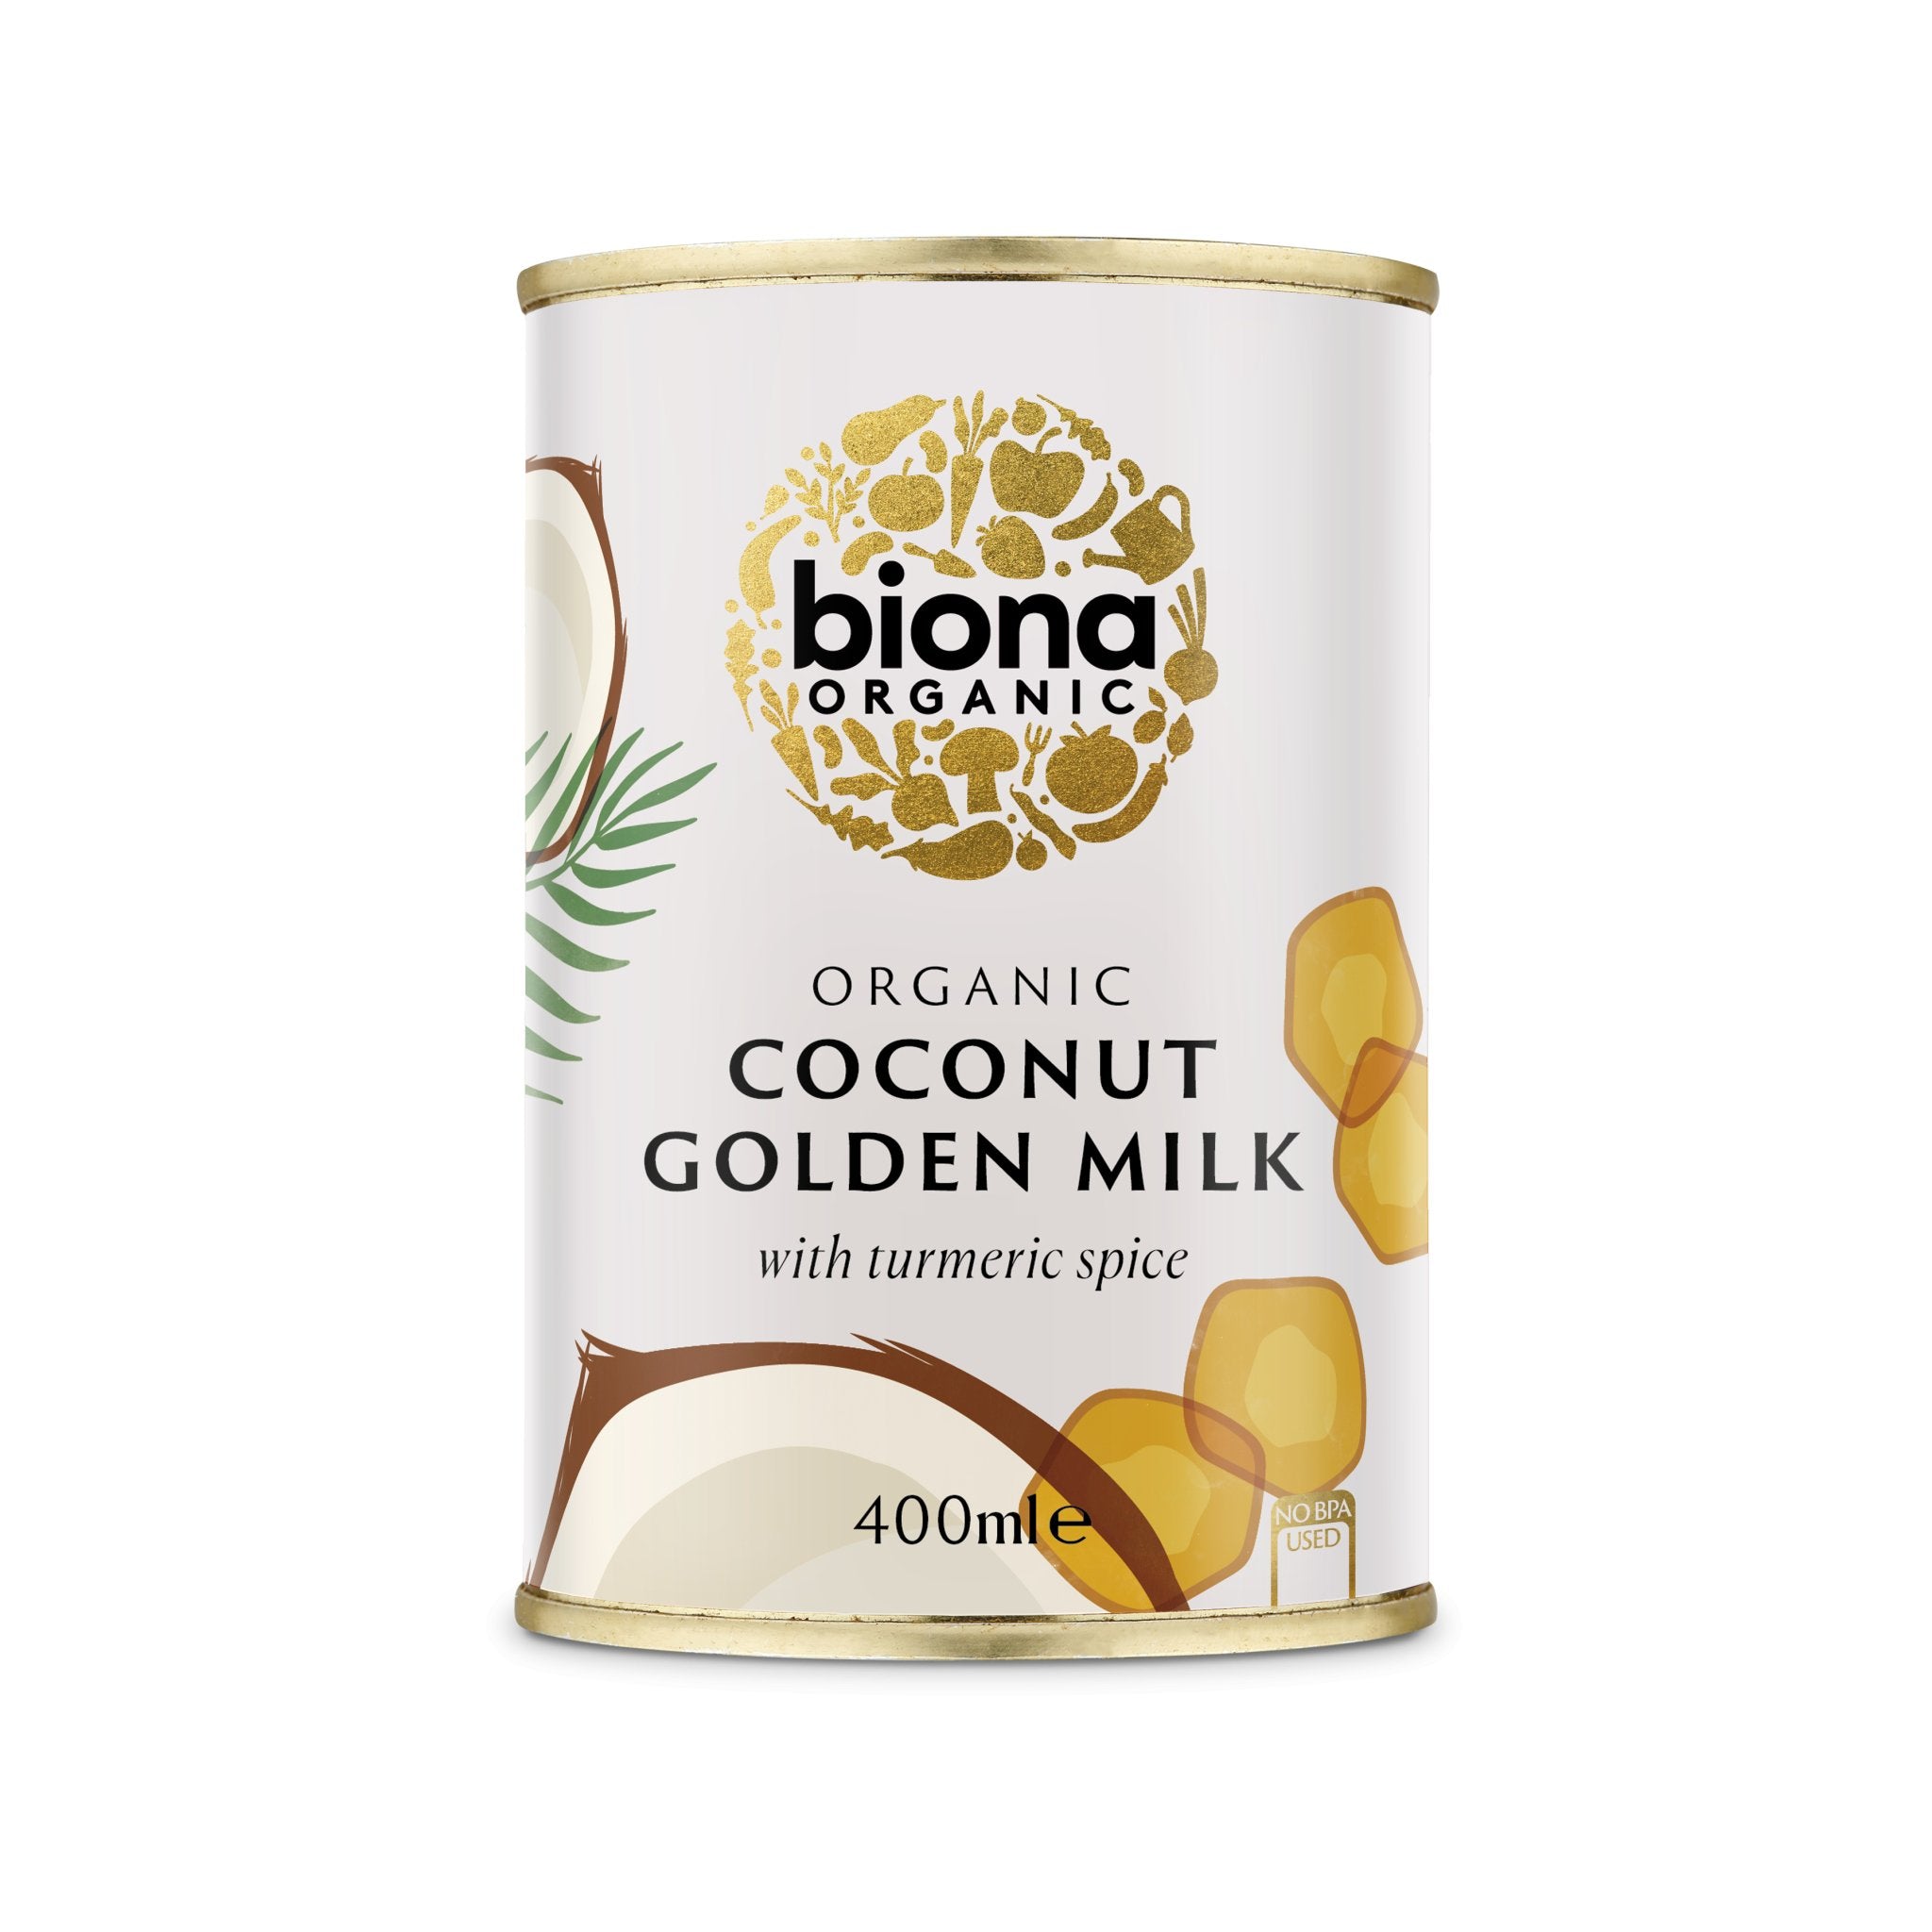 BIONA ORGANIC GOLDEN COCONUT MILK - Glam Organic | Health and Wellness Store - BIONA ORGANIC